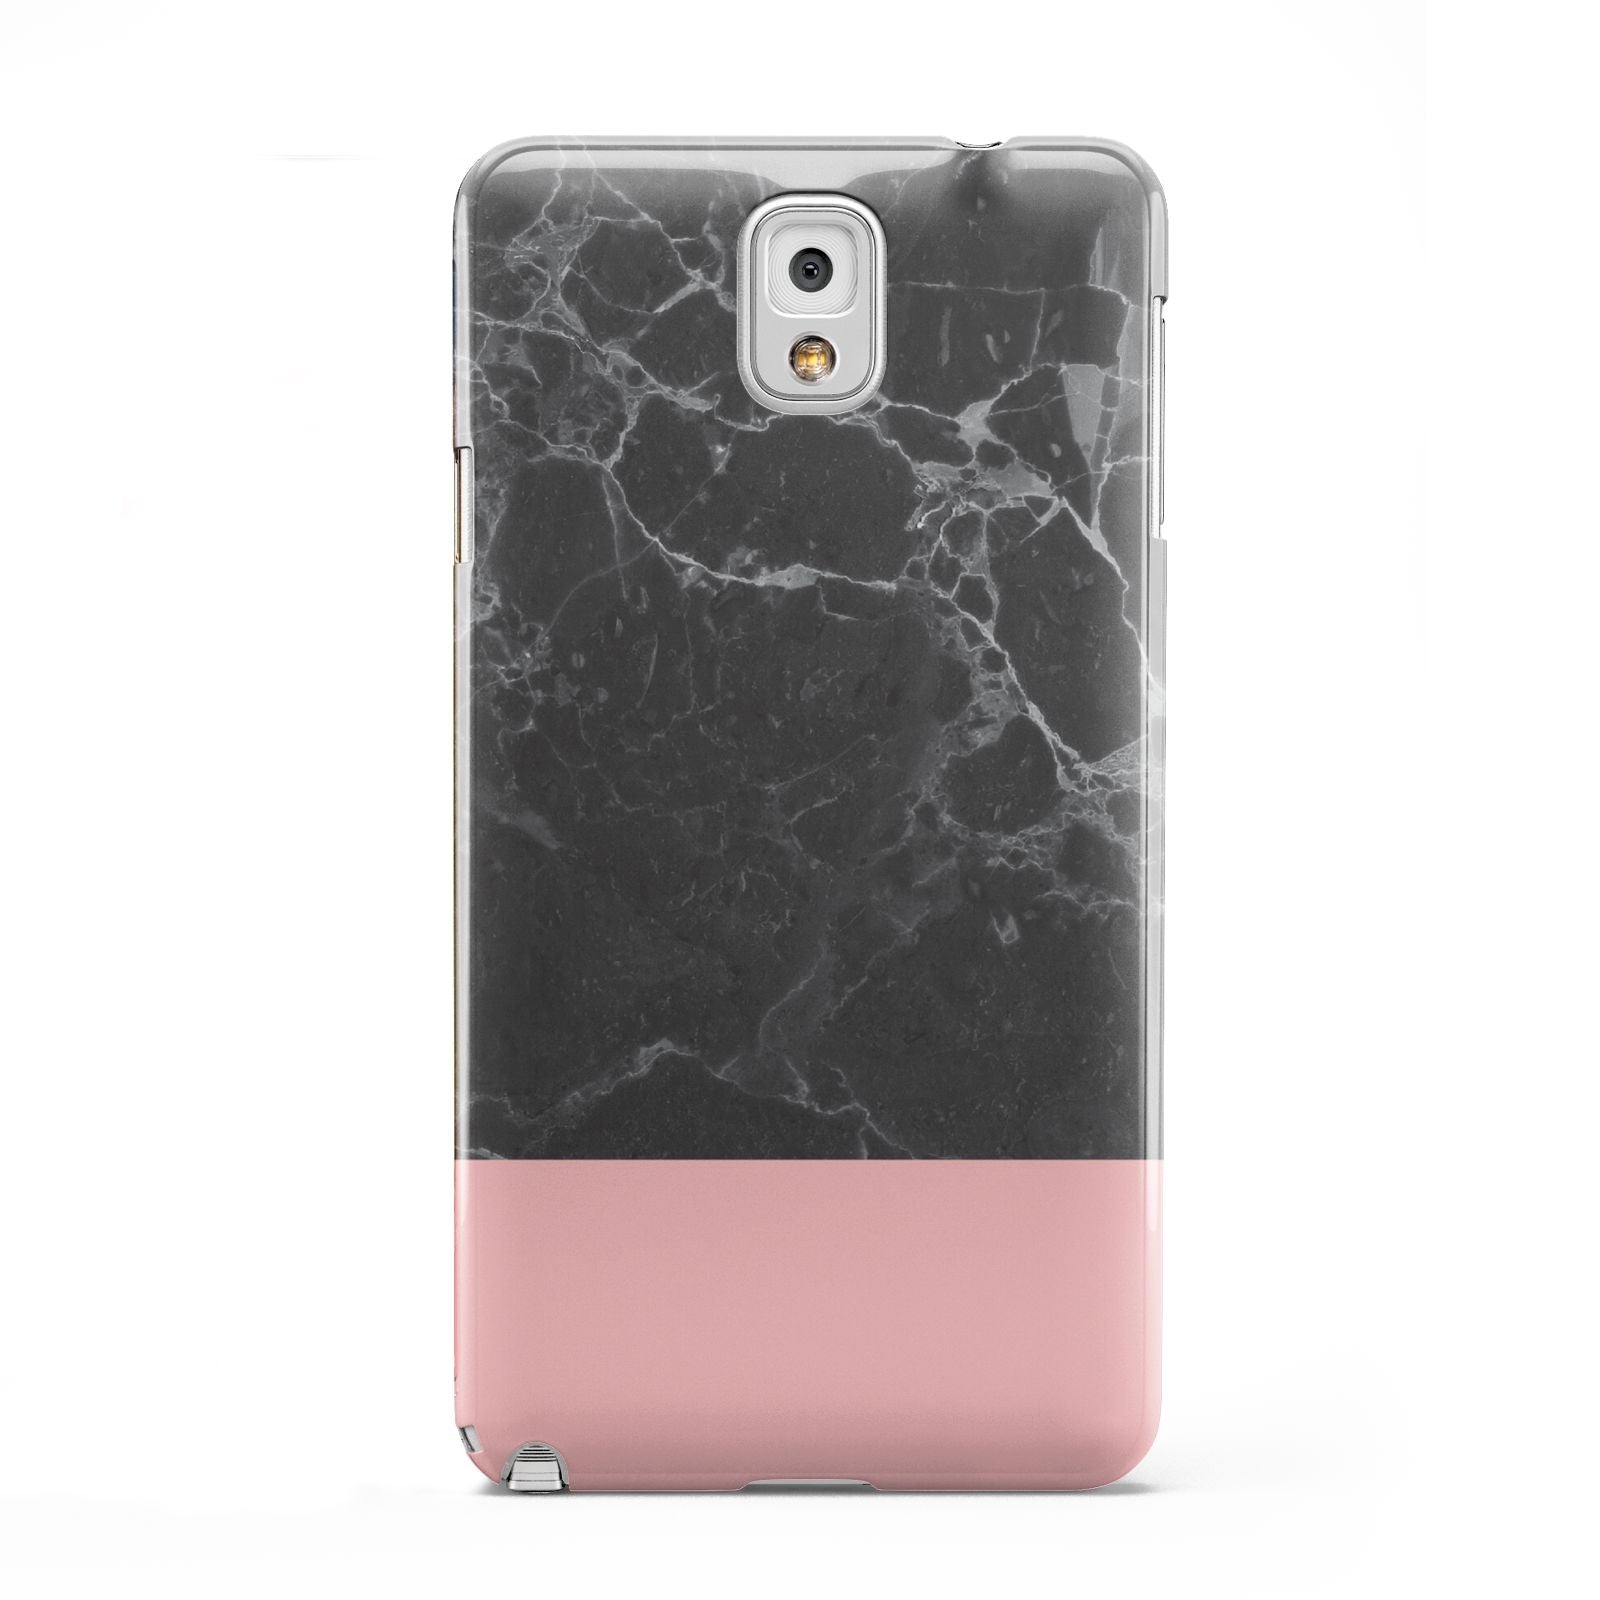 Marble Black Pink Samsung Galaxy Note 3 Case